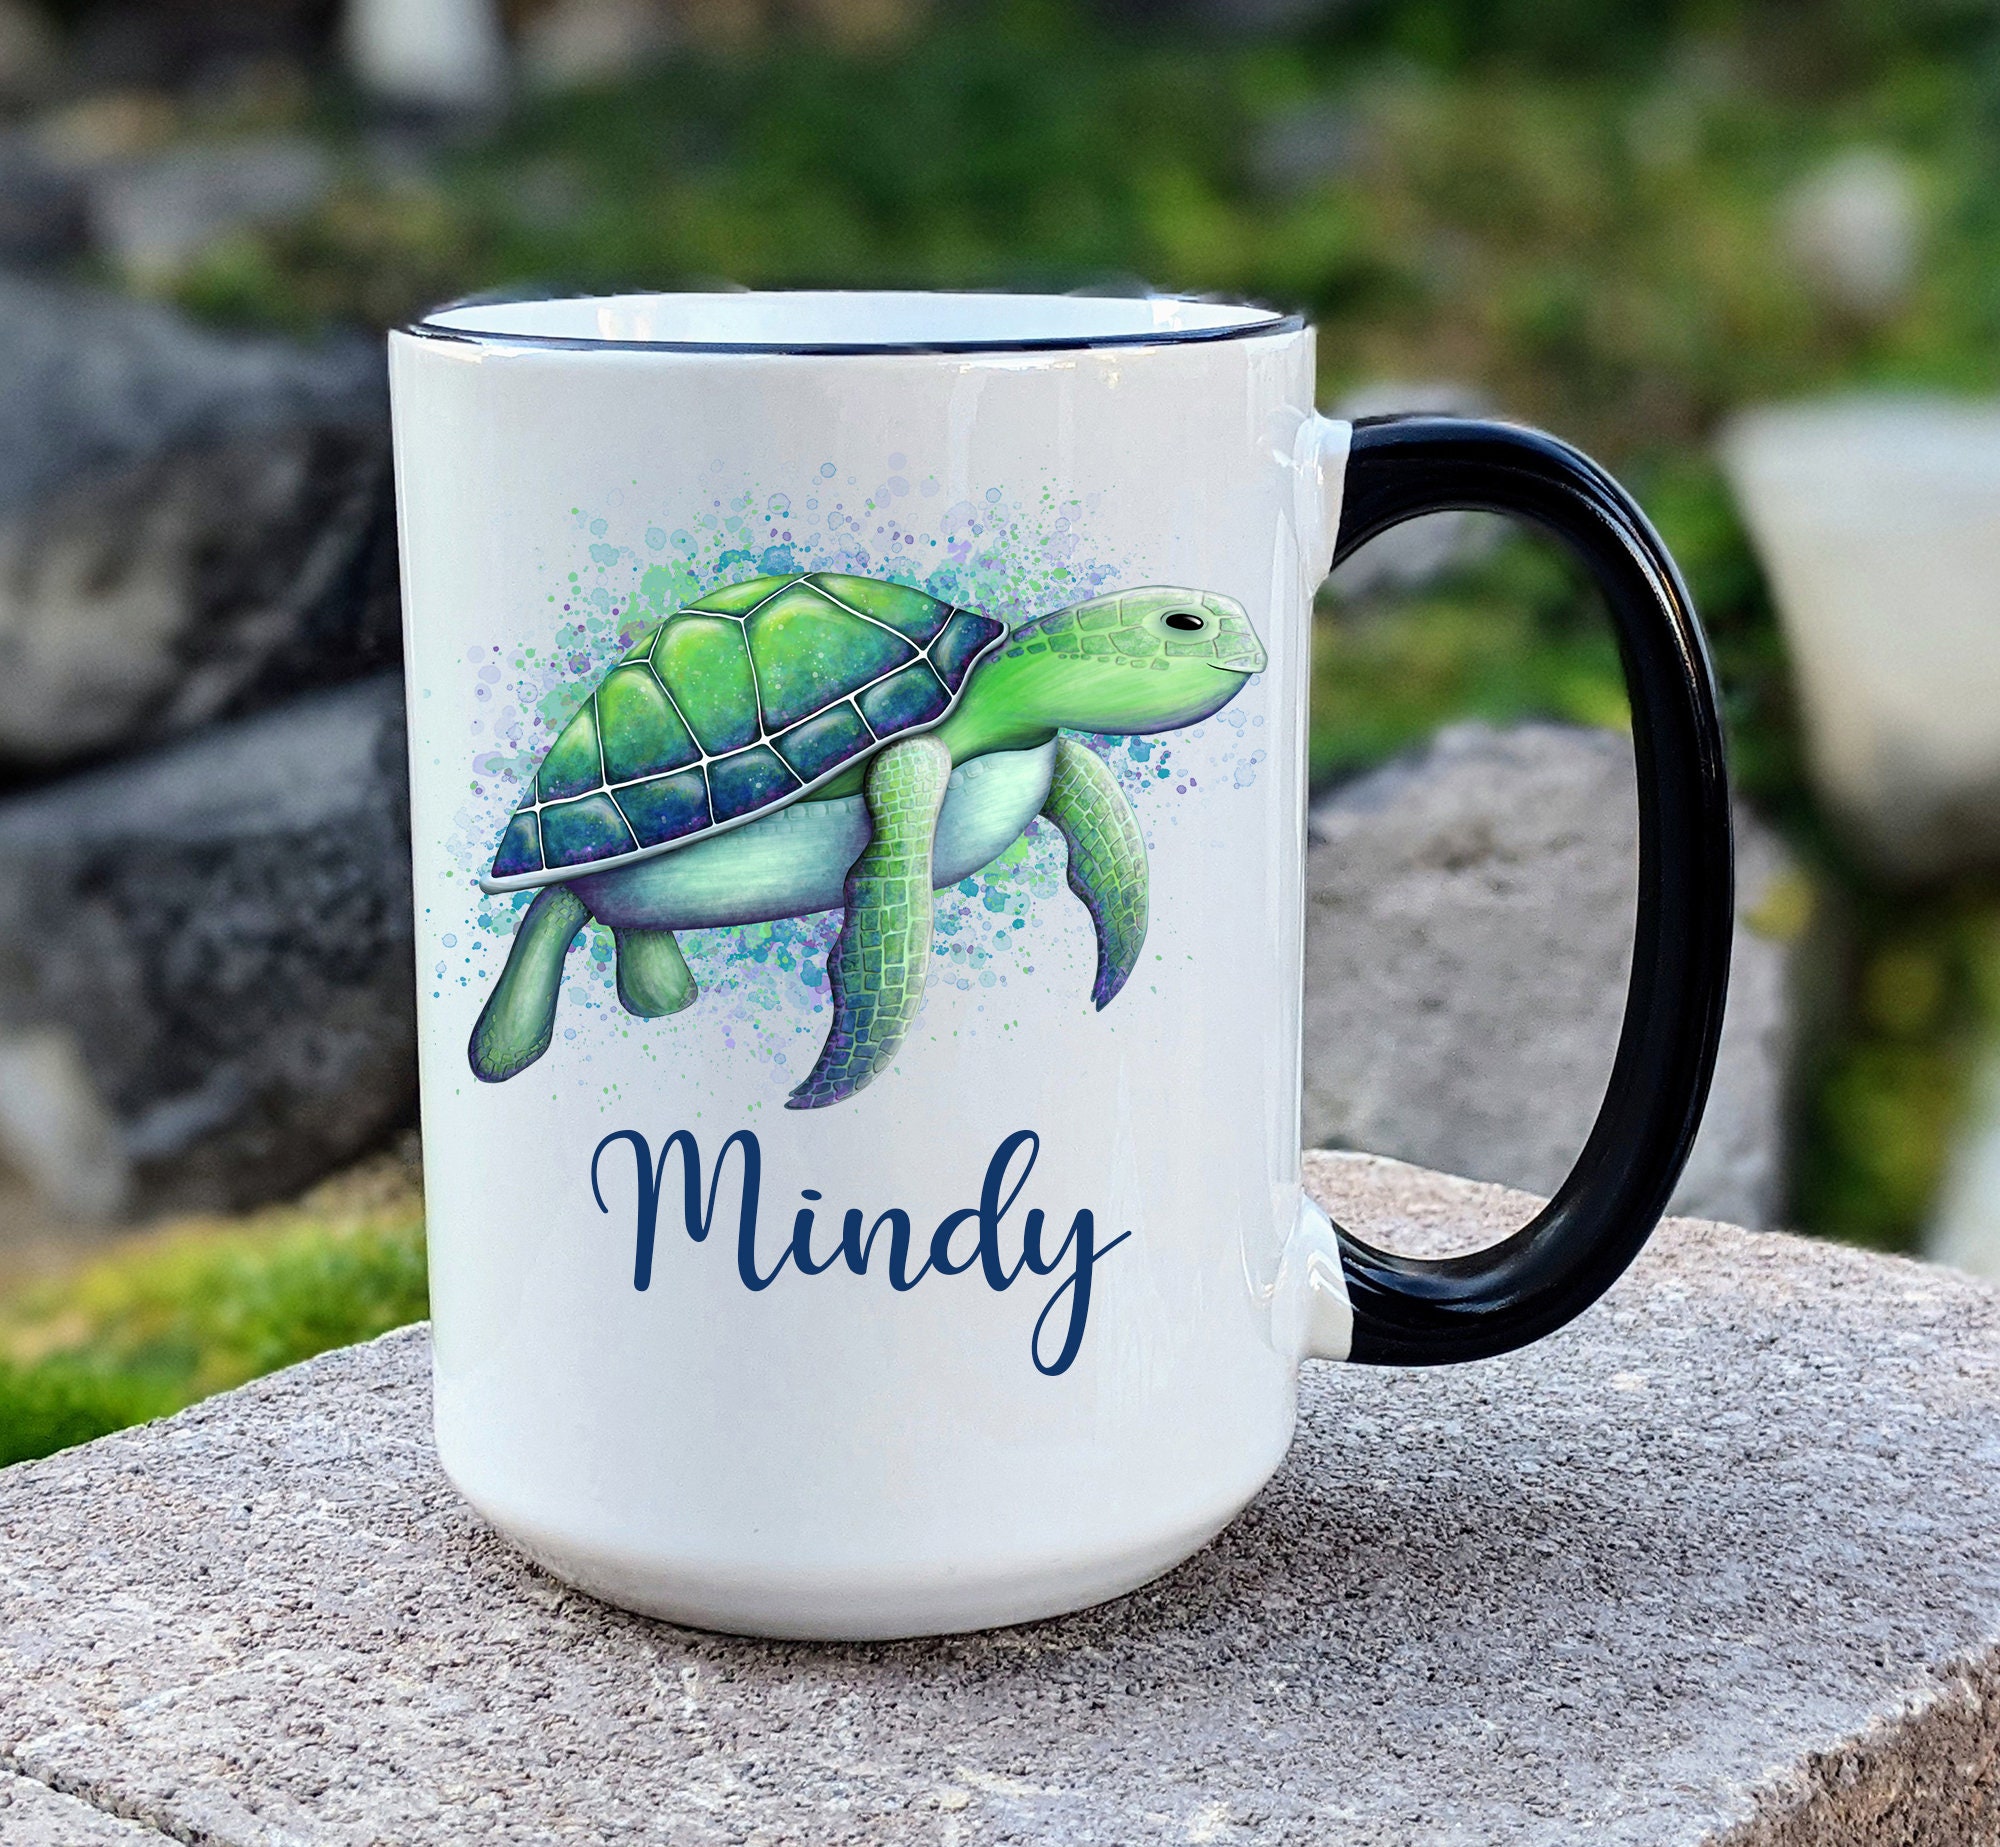 Sea Turtles 22 oz Travel Mug by Swig Life – Turtle Central Gift Shop